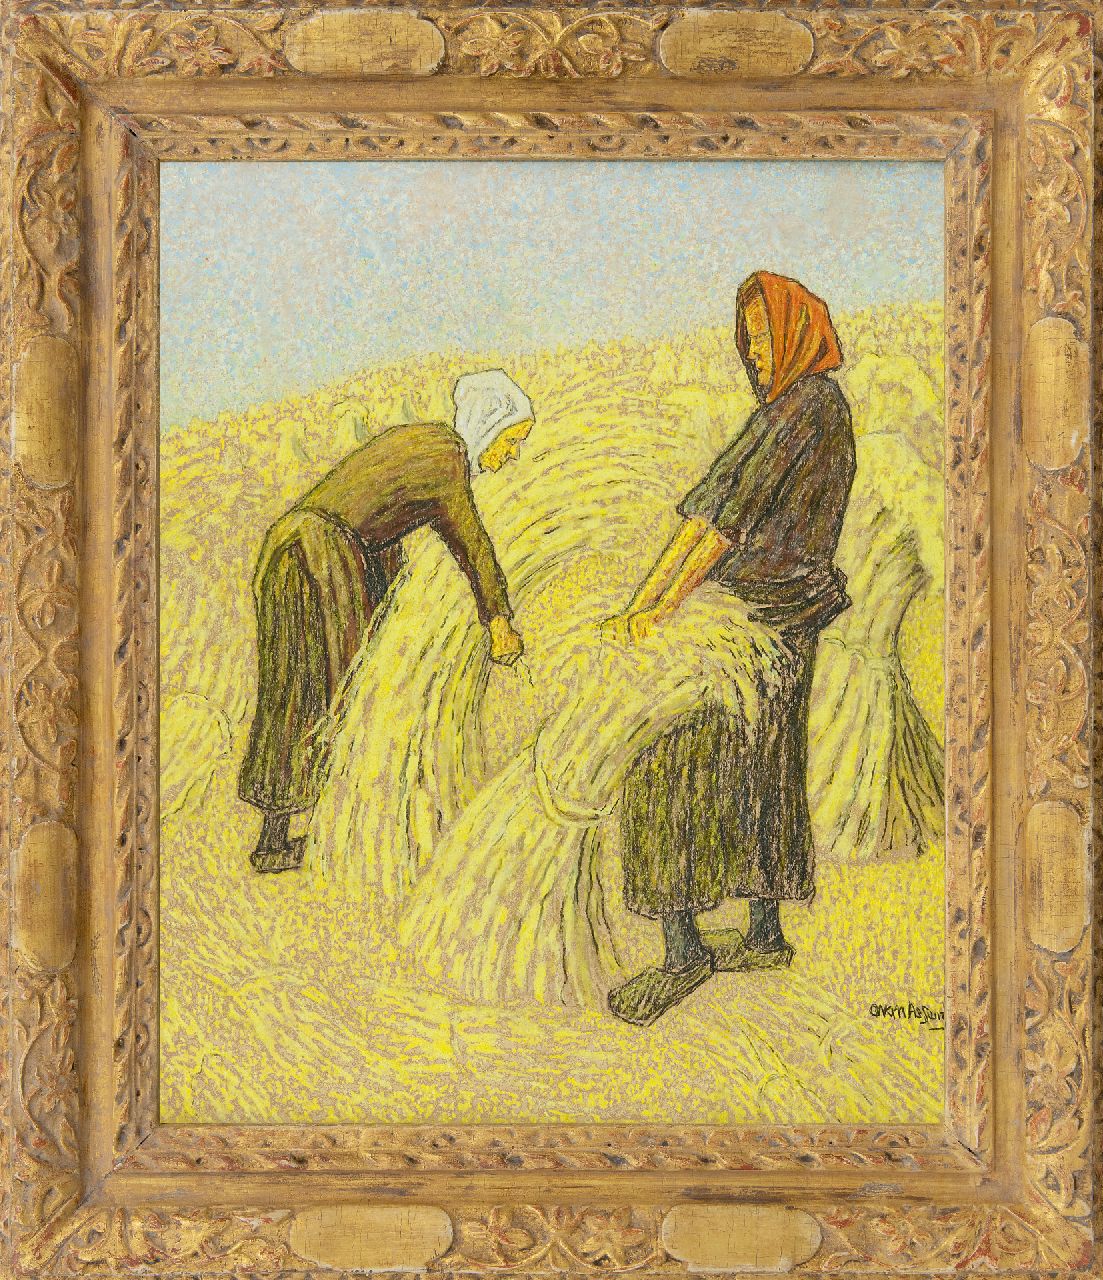 Assendelft C.A. van | Cornelis Albert van Assendelft, Harvest time, pastel on paper 70.5 x 56.0 cm, signed l.r.